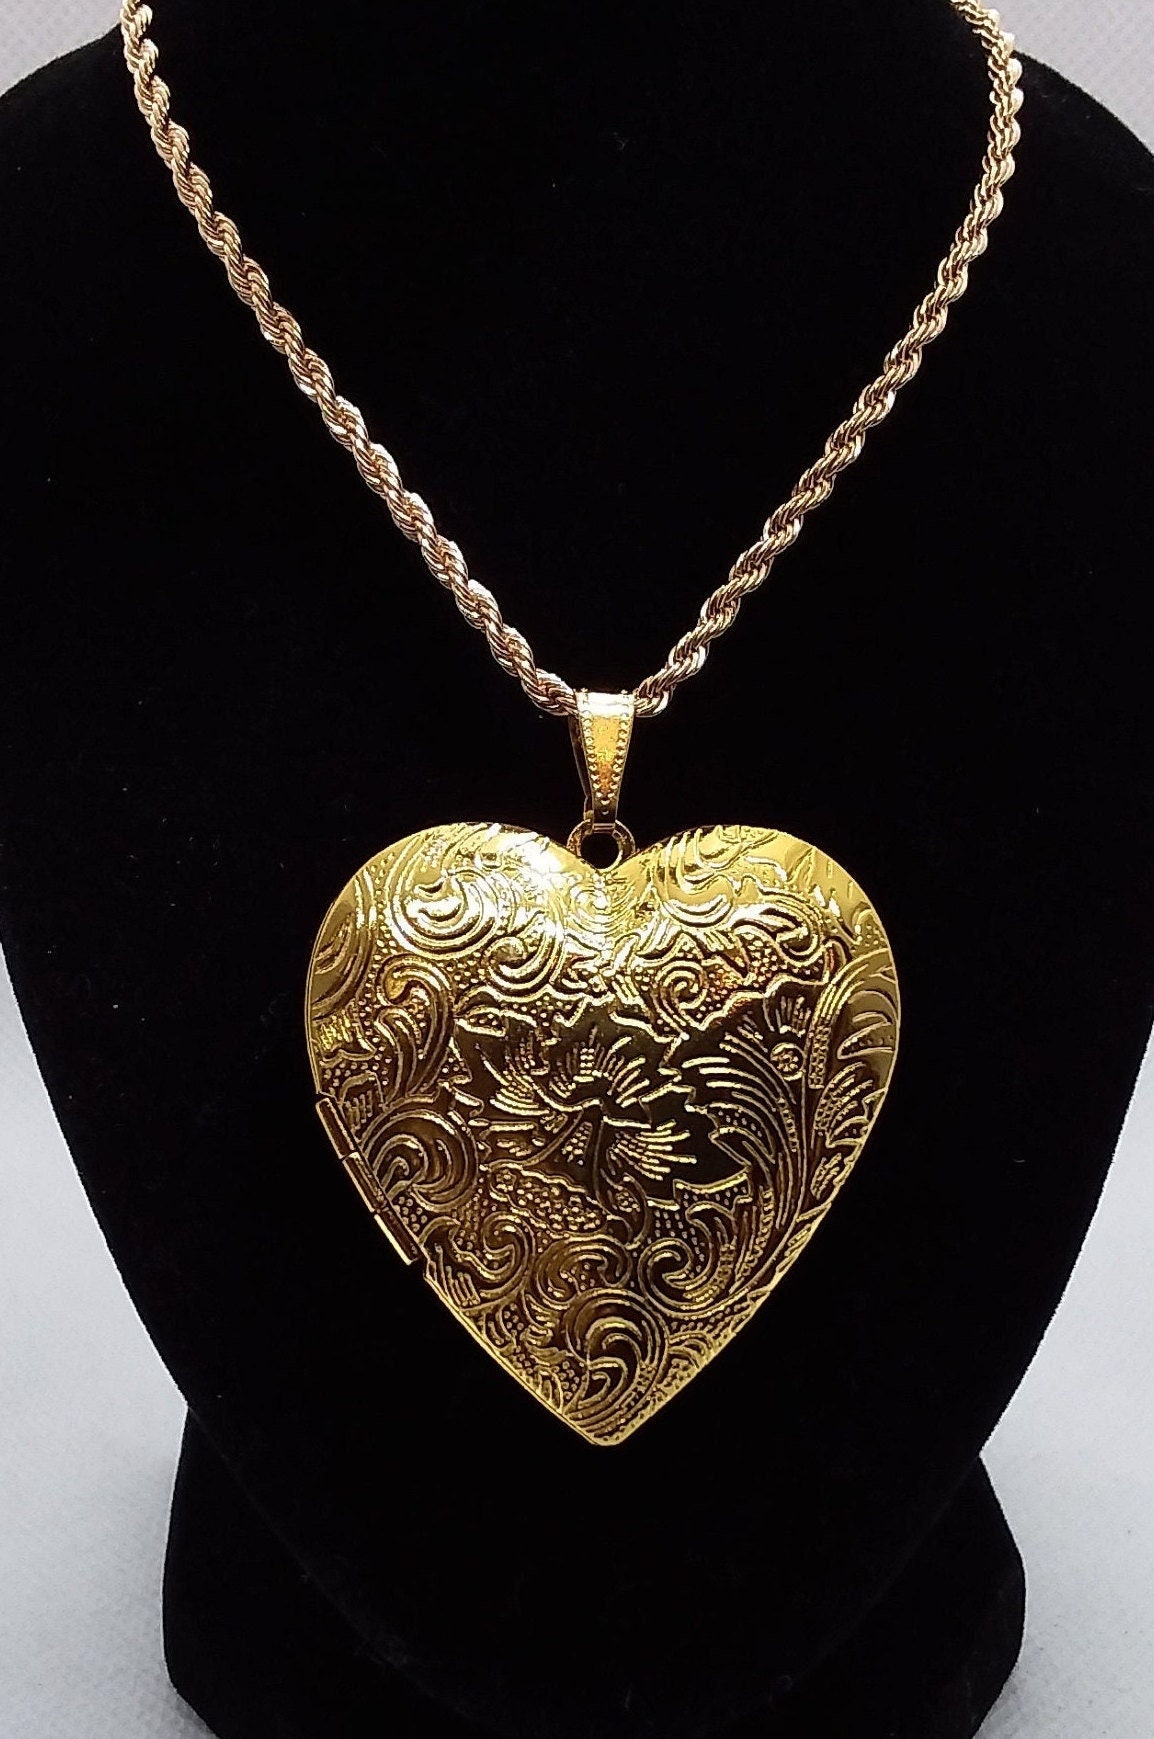 Buy Locket Gold Plated HUGE Heart Shaped Photo Locket Pendant Necklace  Keepsake Jewelry Heart Locket Mothers Day Gift Big Gold Locket Online in  India - Etsy